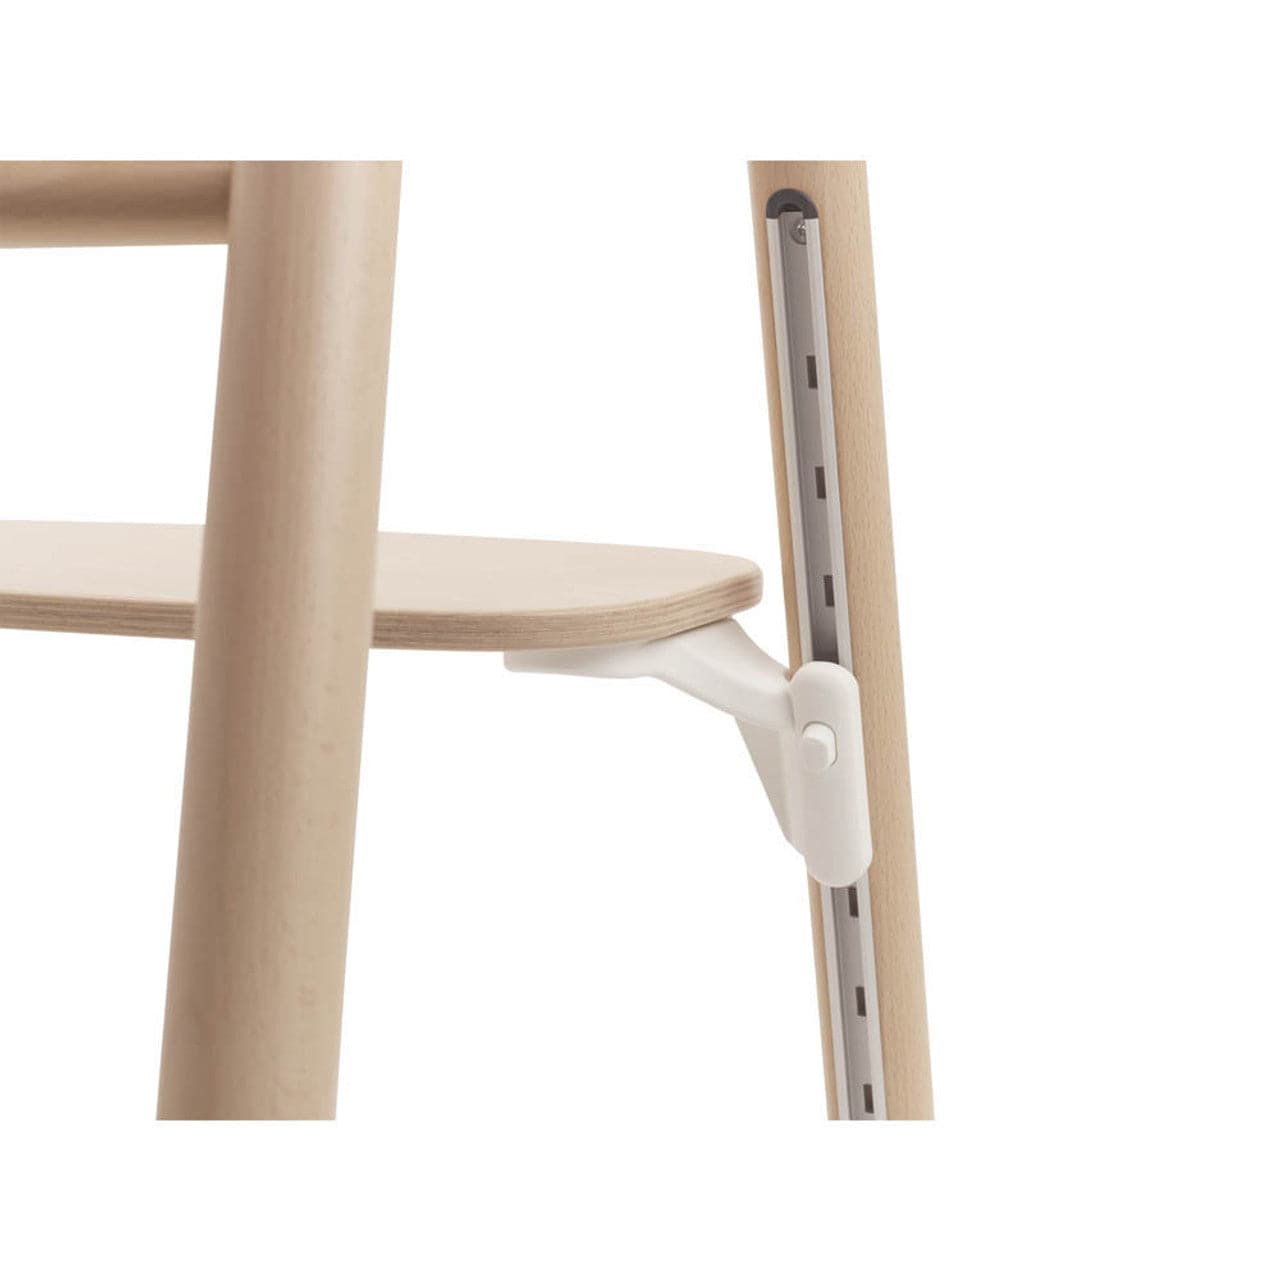 Bugaboo Giraffe Highchair + Newborn Set - Neutral Wood/White -  | For Your Little One